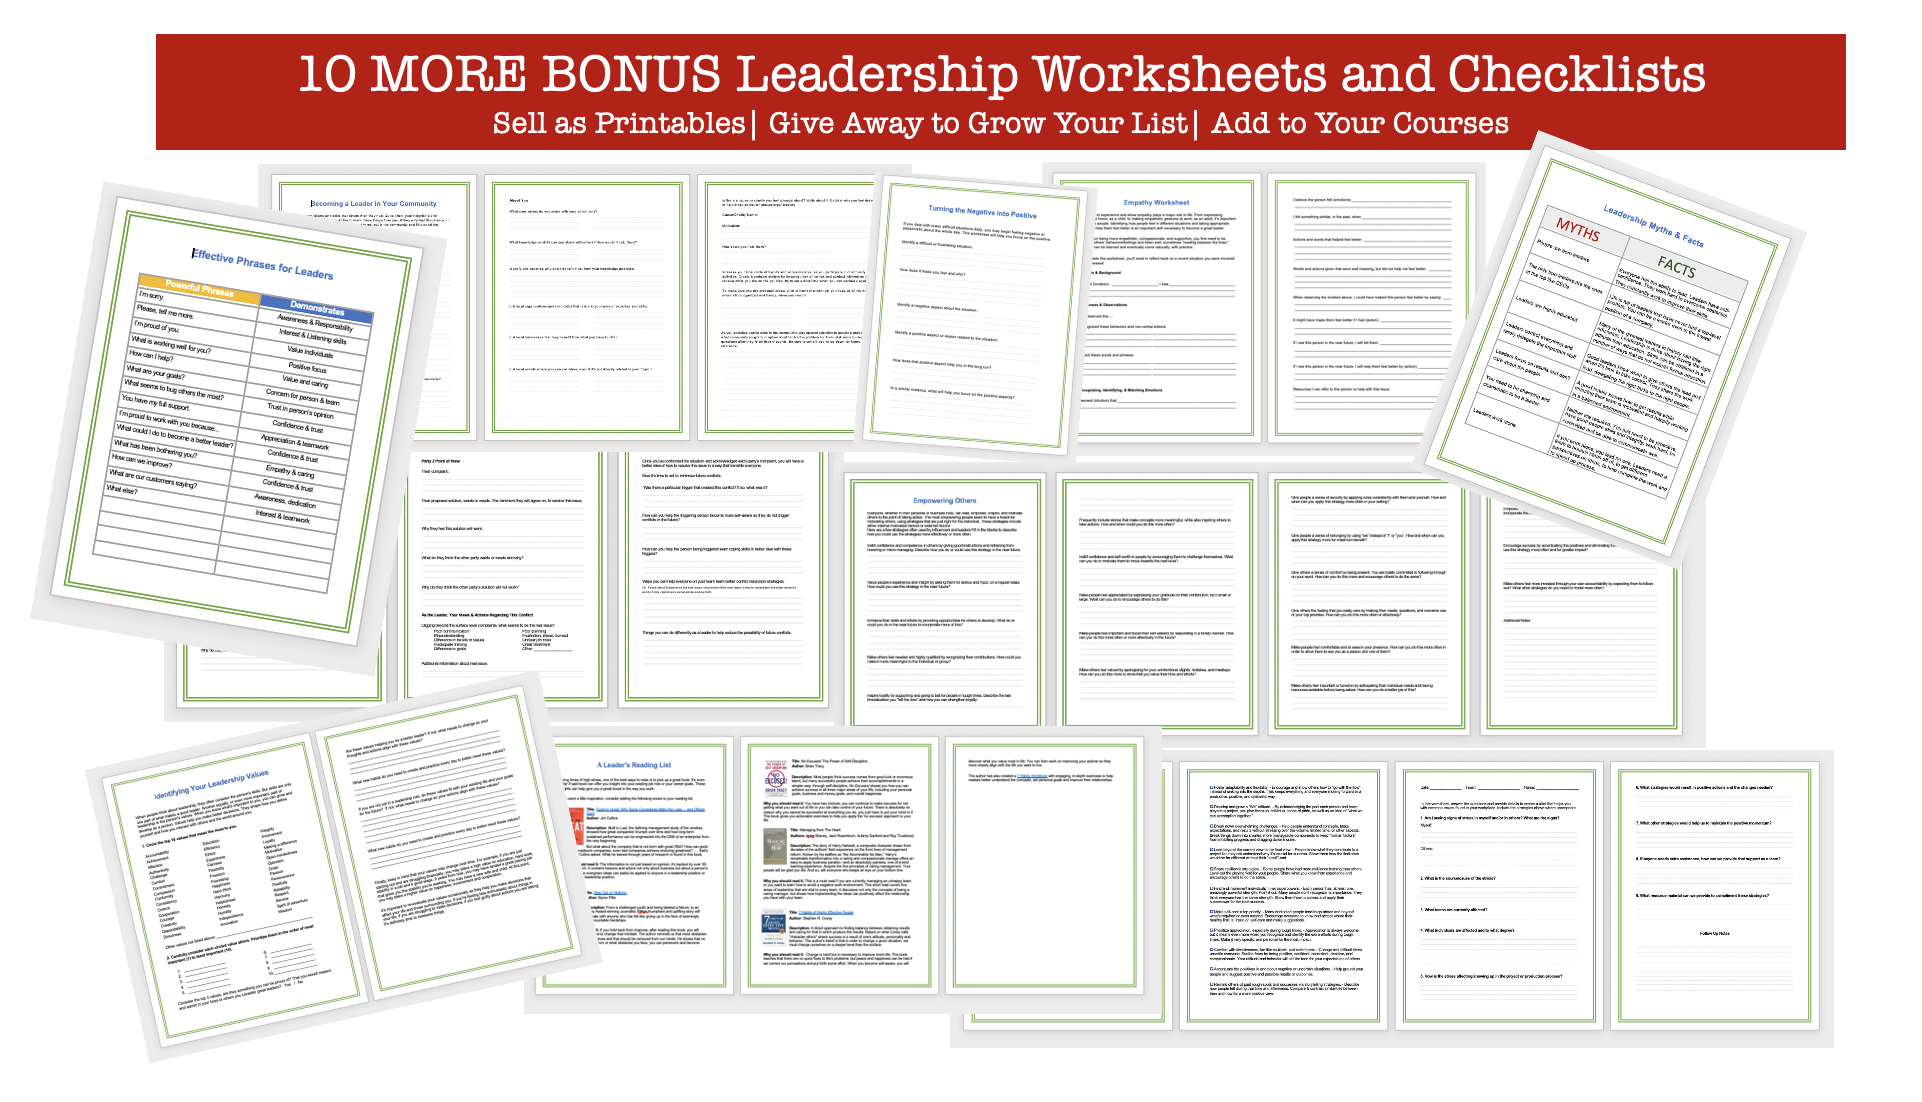 More Bonus Worksheets and Checklists